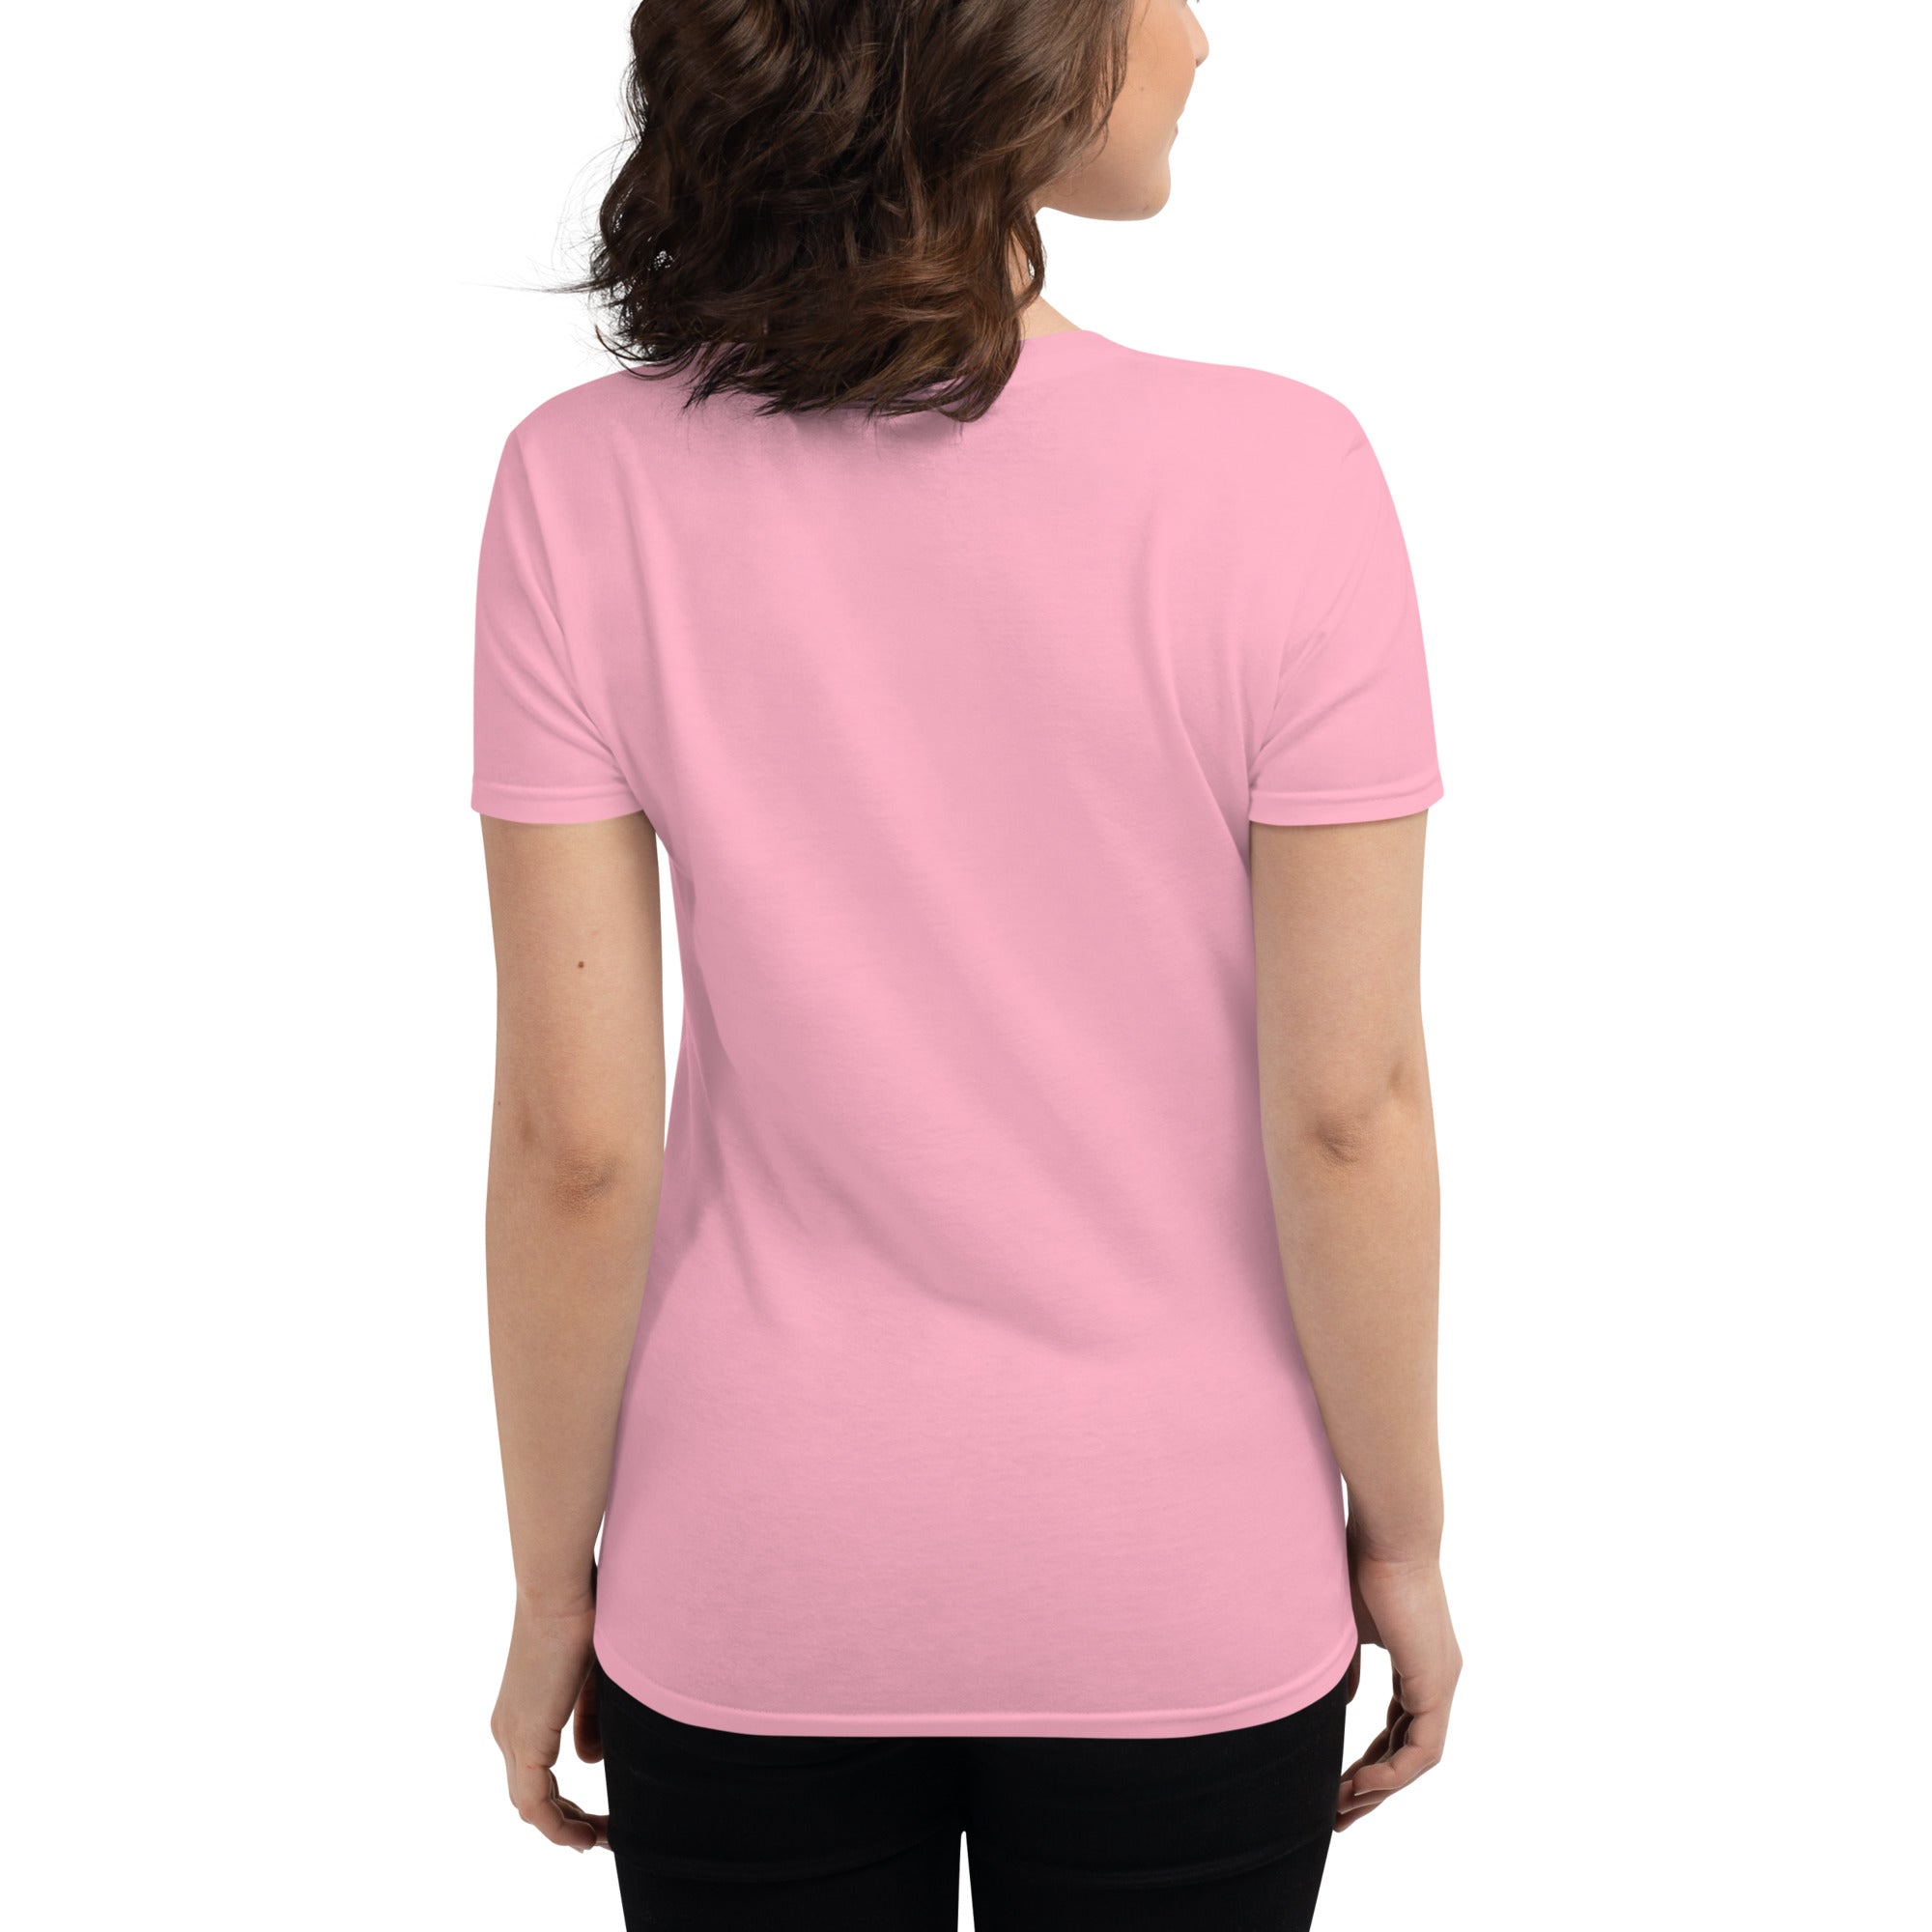 Dedicated Grappler Basics - Pink Living short Grappling Dedicated The – Grappler Lifestyle t-shirt sleeve - Women\'s